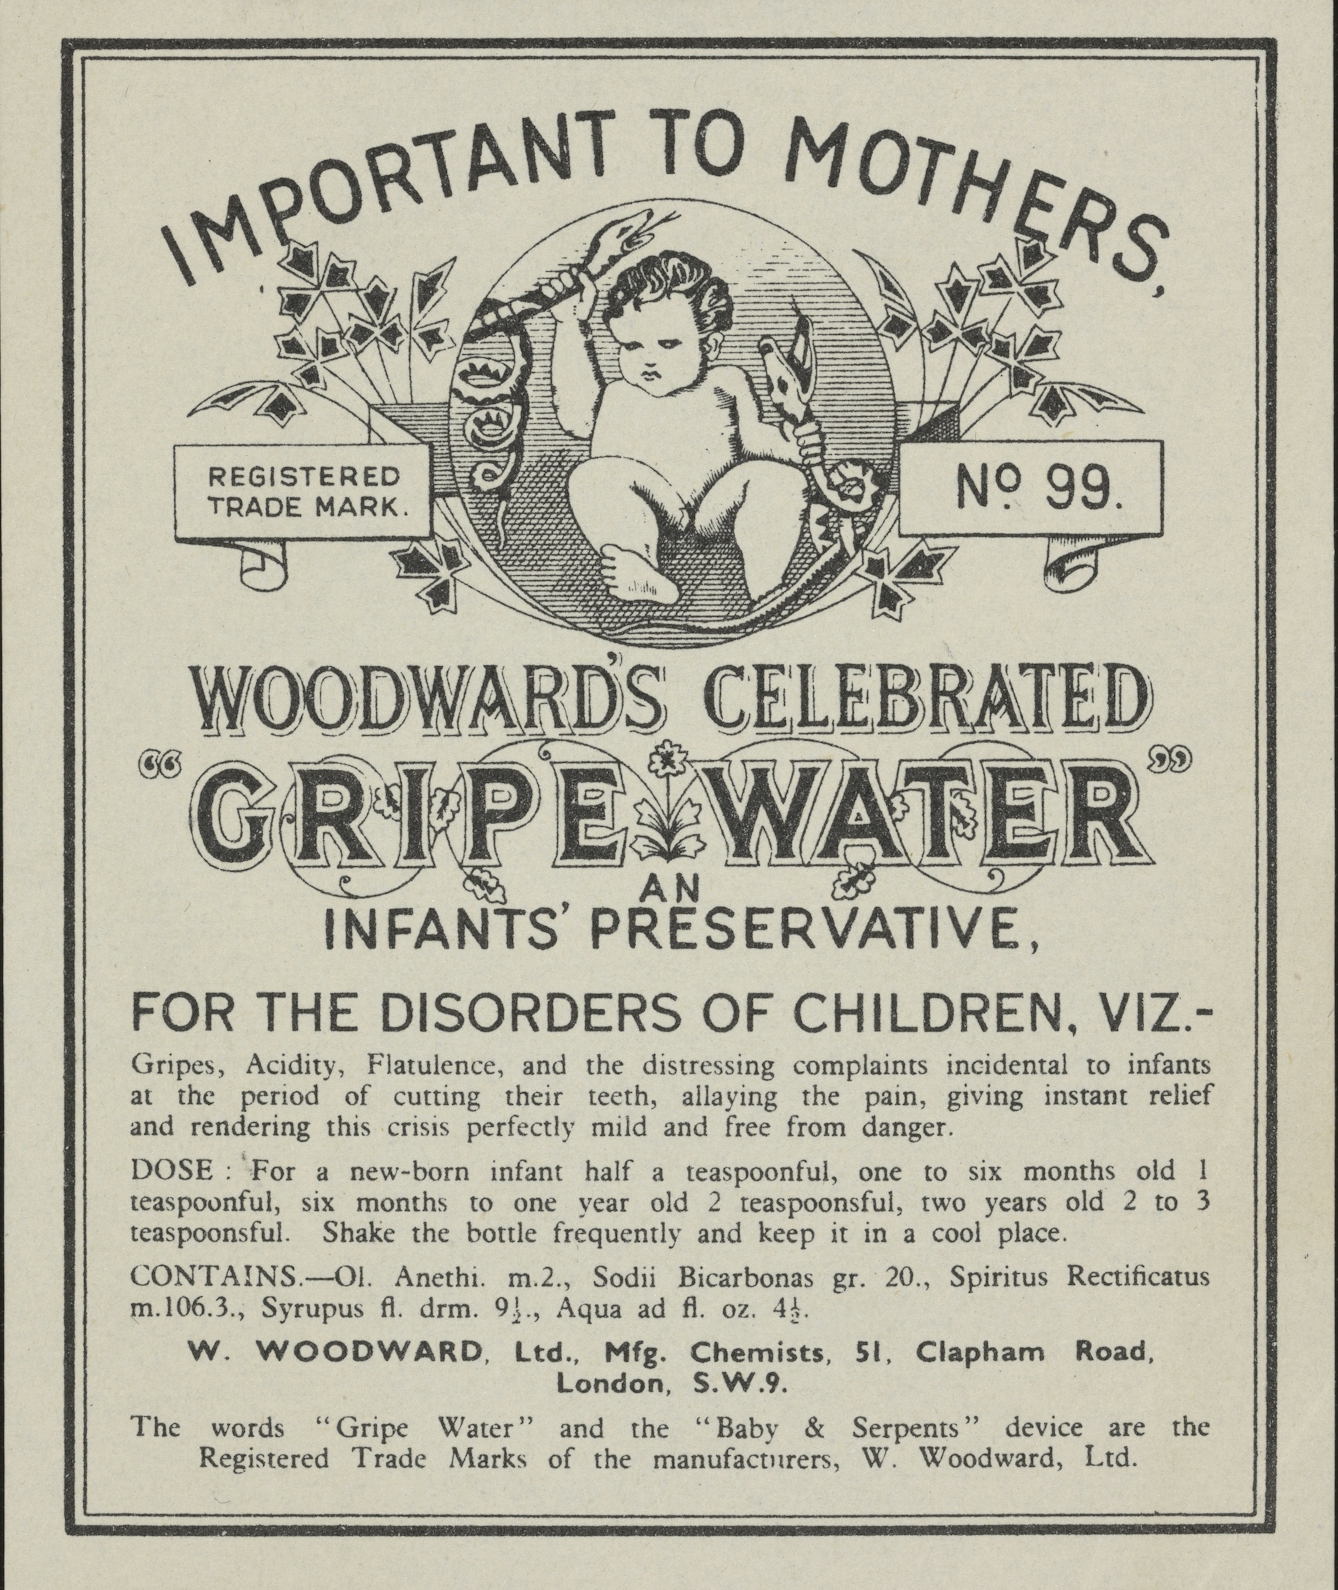 Advert for Woodward's Gripe Water